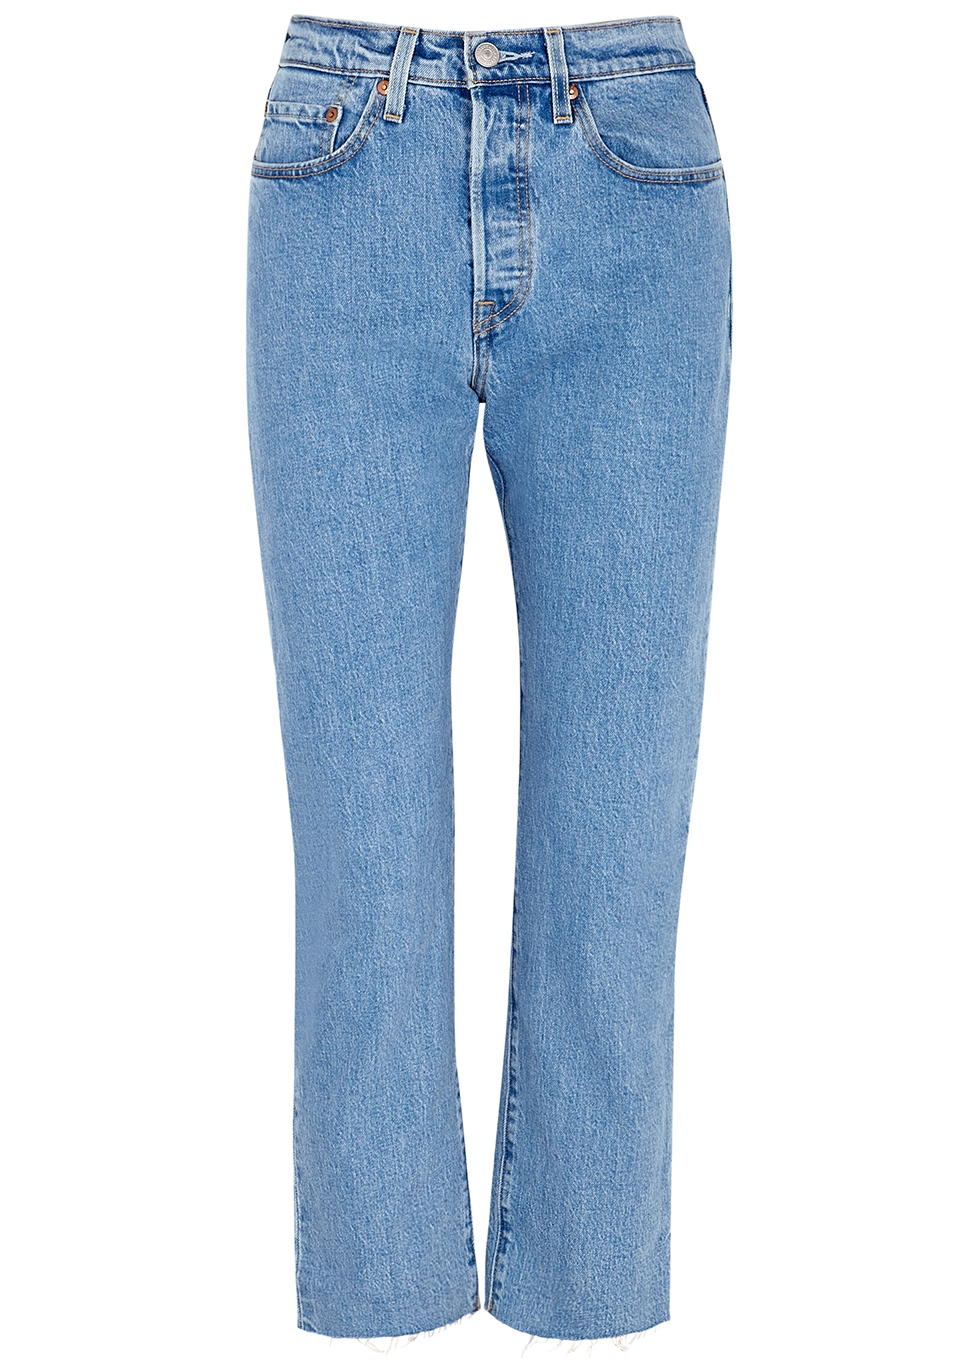 Levi's 501 blue high-rise straight-leg jeans - Harvey Nichols